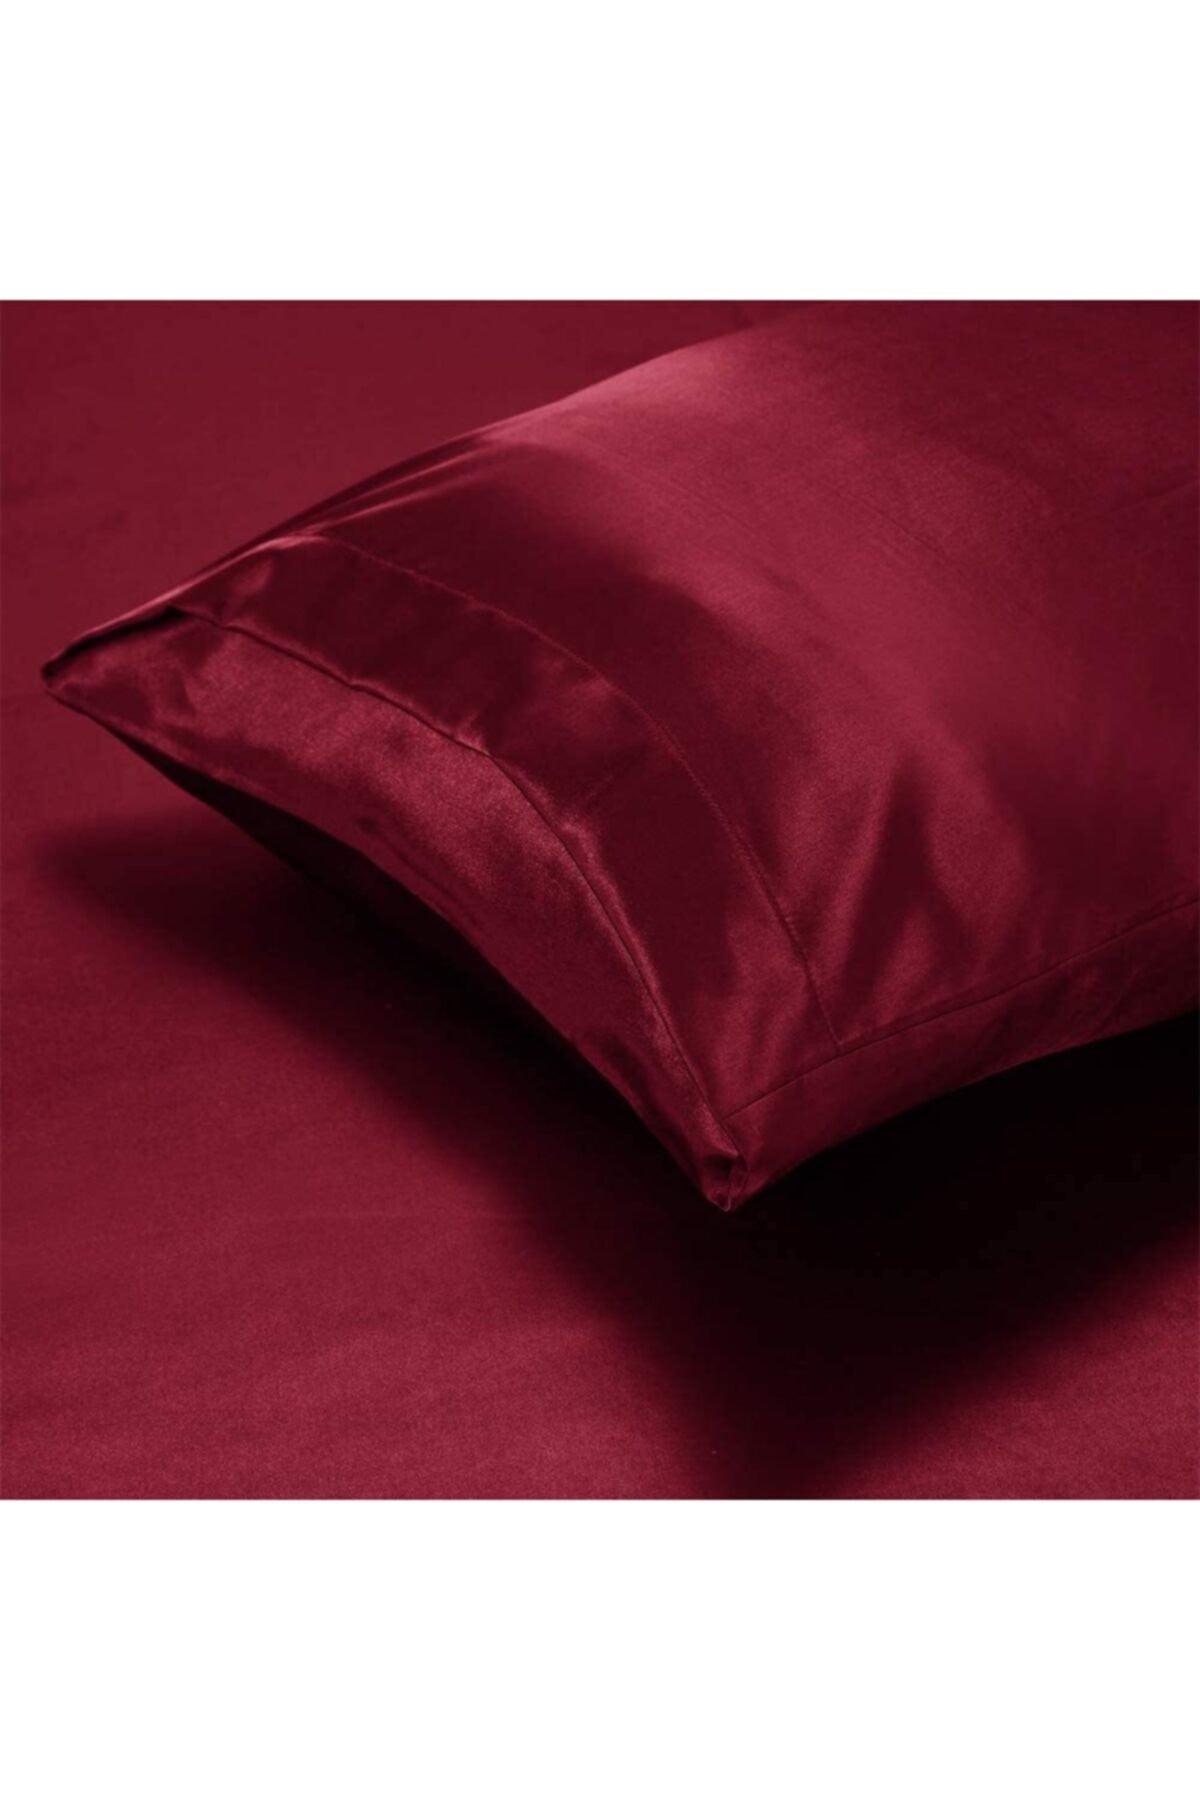 Luxury Satin 4 Pieces Double Duvet Cover Set 200x220 Cm Elastic Bed Sheet Claret Red Color - Swordslife